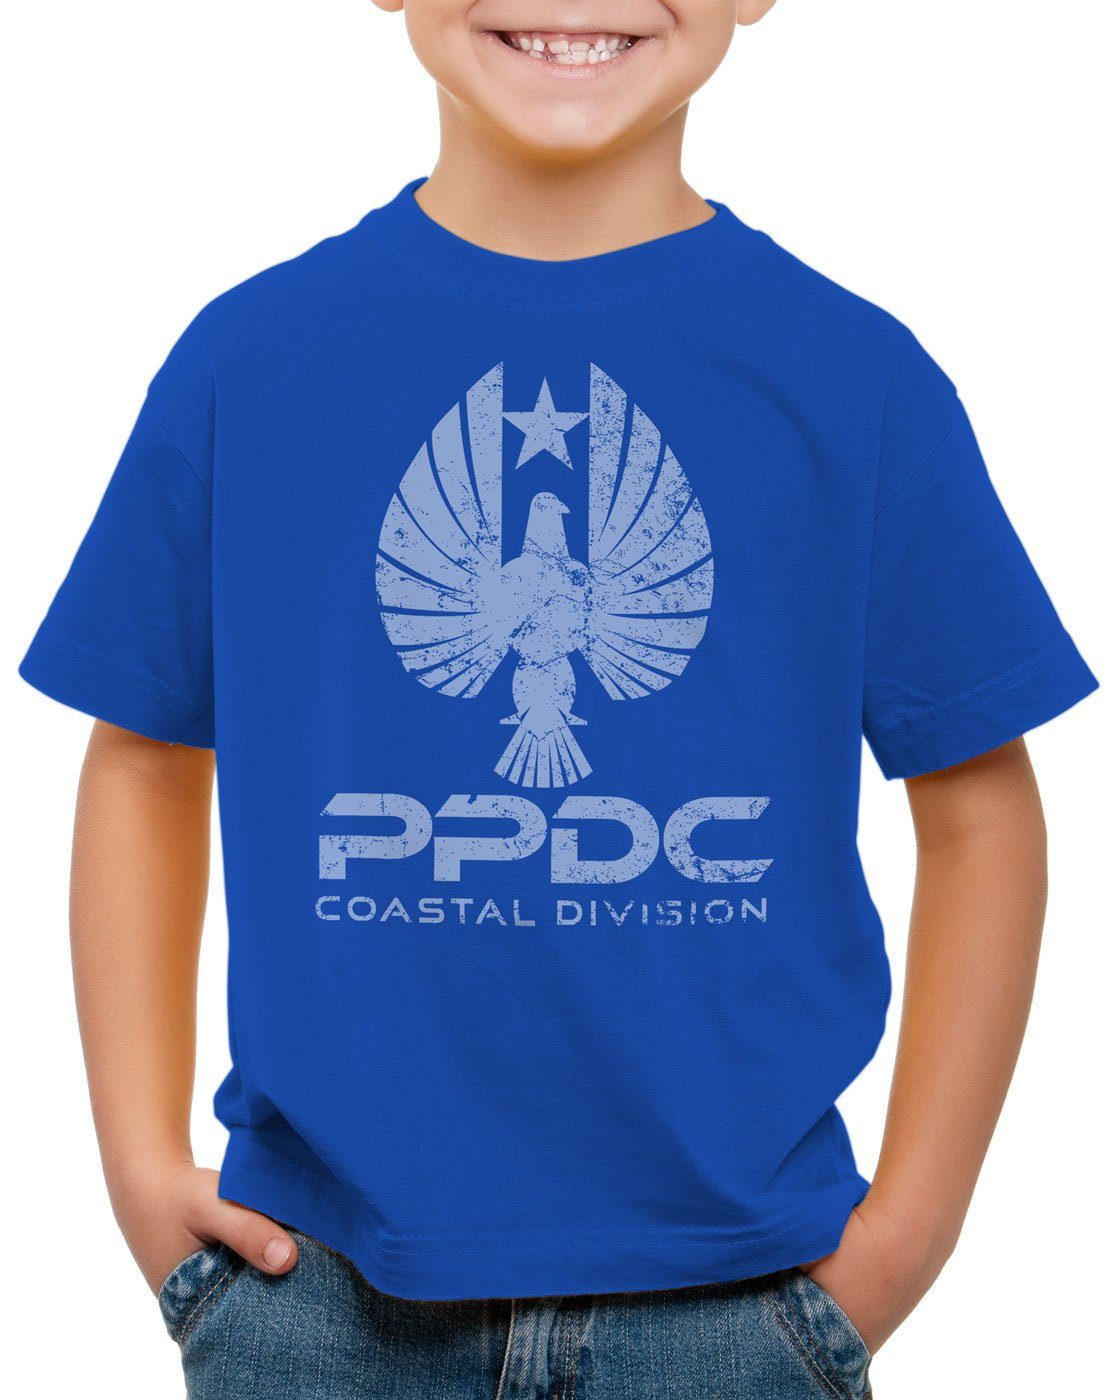 Pan Pacific abwehr Print-Shirt Kinder style3 Defense T-Shirt blau kaiju